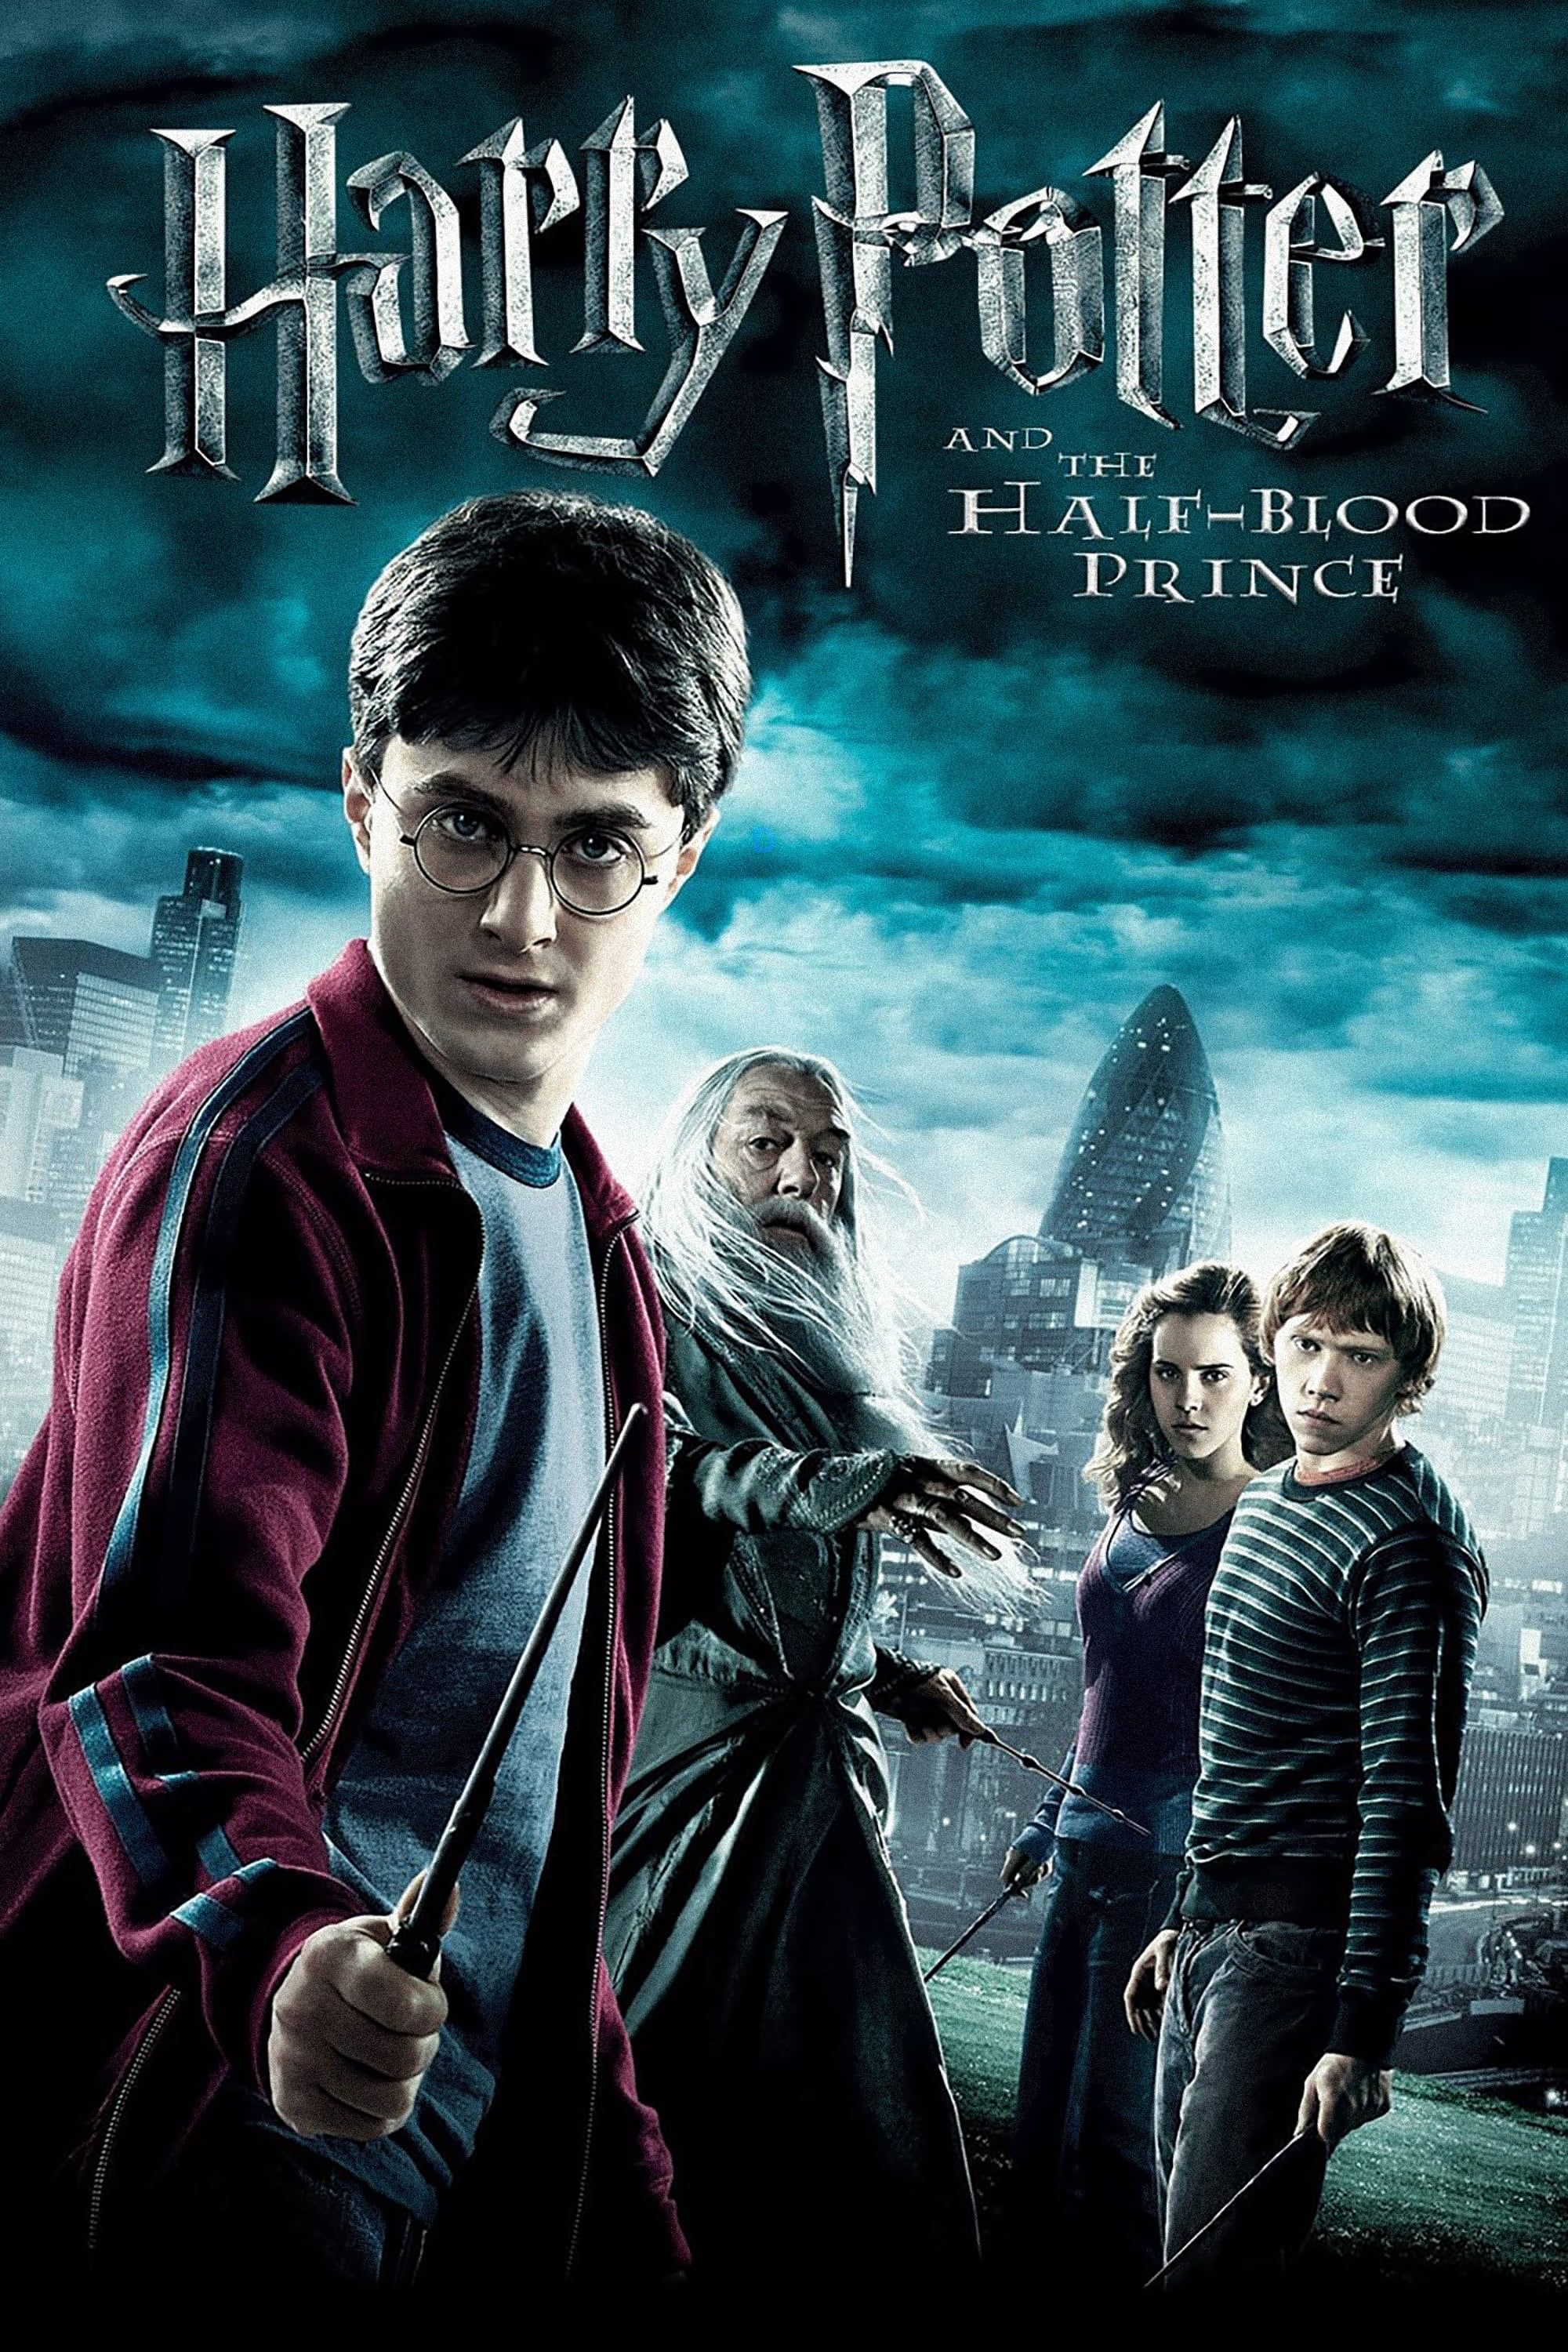  Harry Potter & The Deathly Hallows Part 1 (Blu-ray 3D) : Steve  Kloves, Lionel Wigram, David Heyman, David Barron, J.K. Rowling, Daniel  Radcliffe, Rupert Grint, Emma Watson, Helena Bonham Carter, Robbie